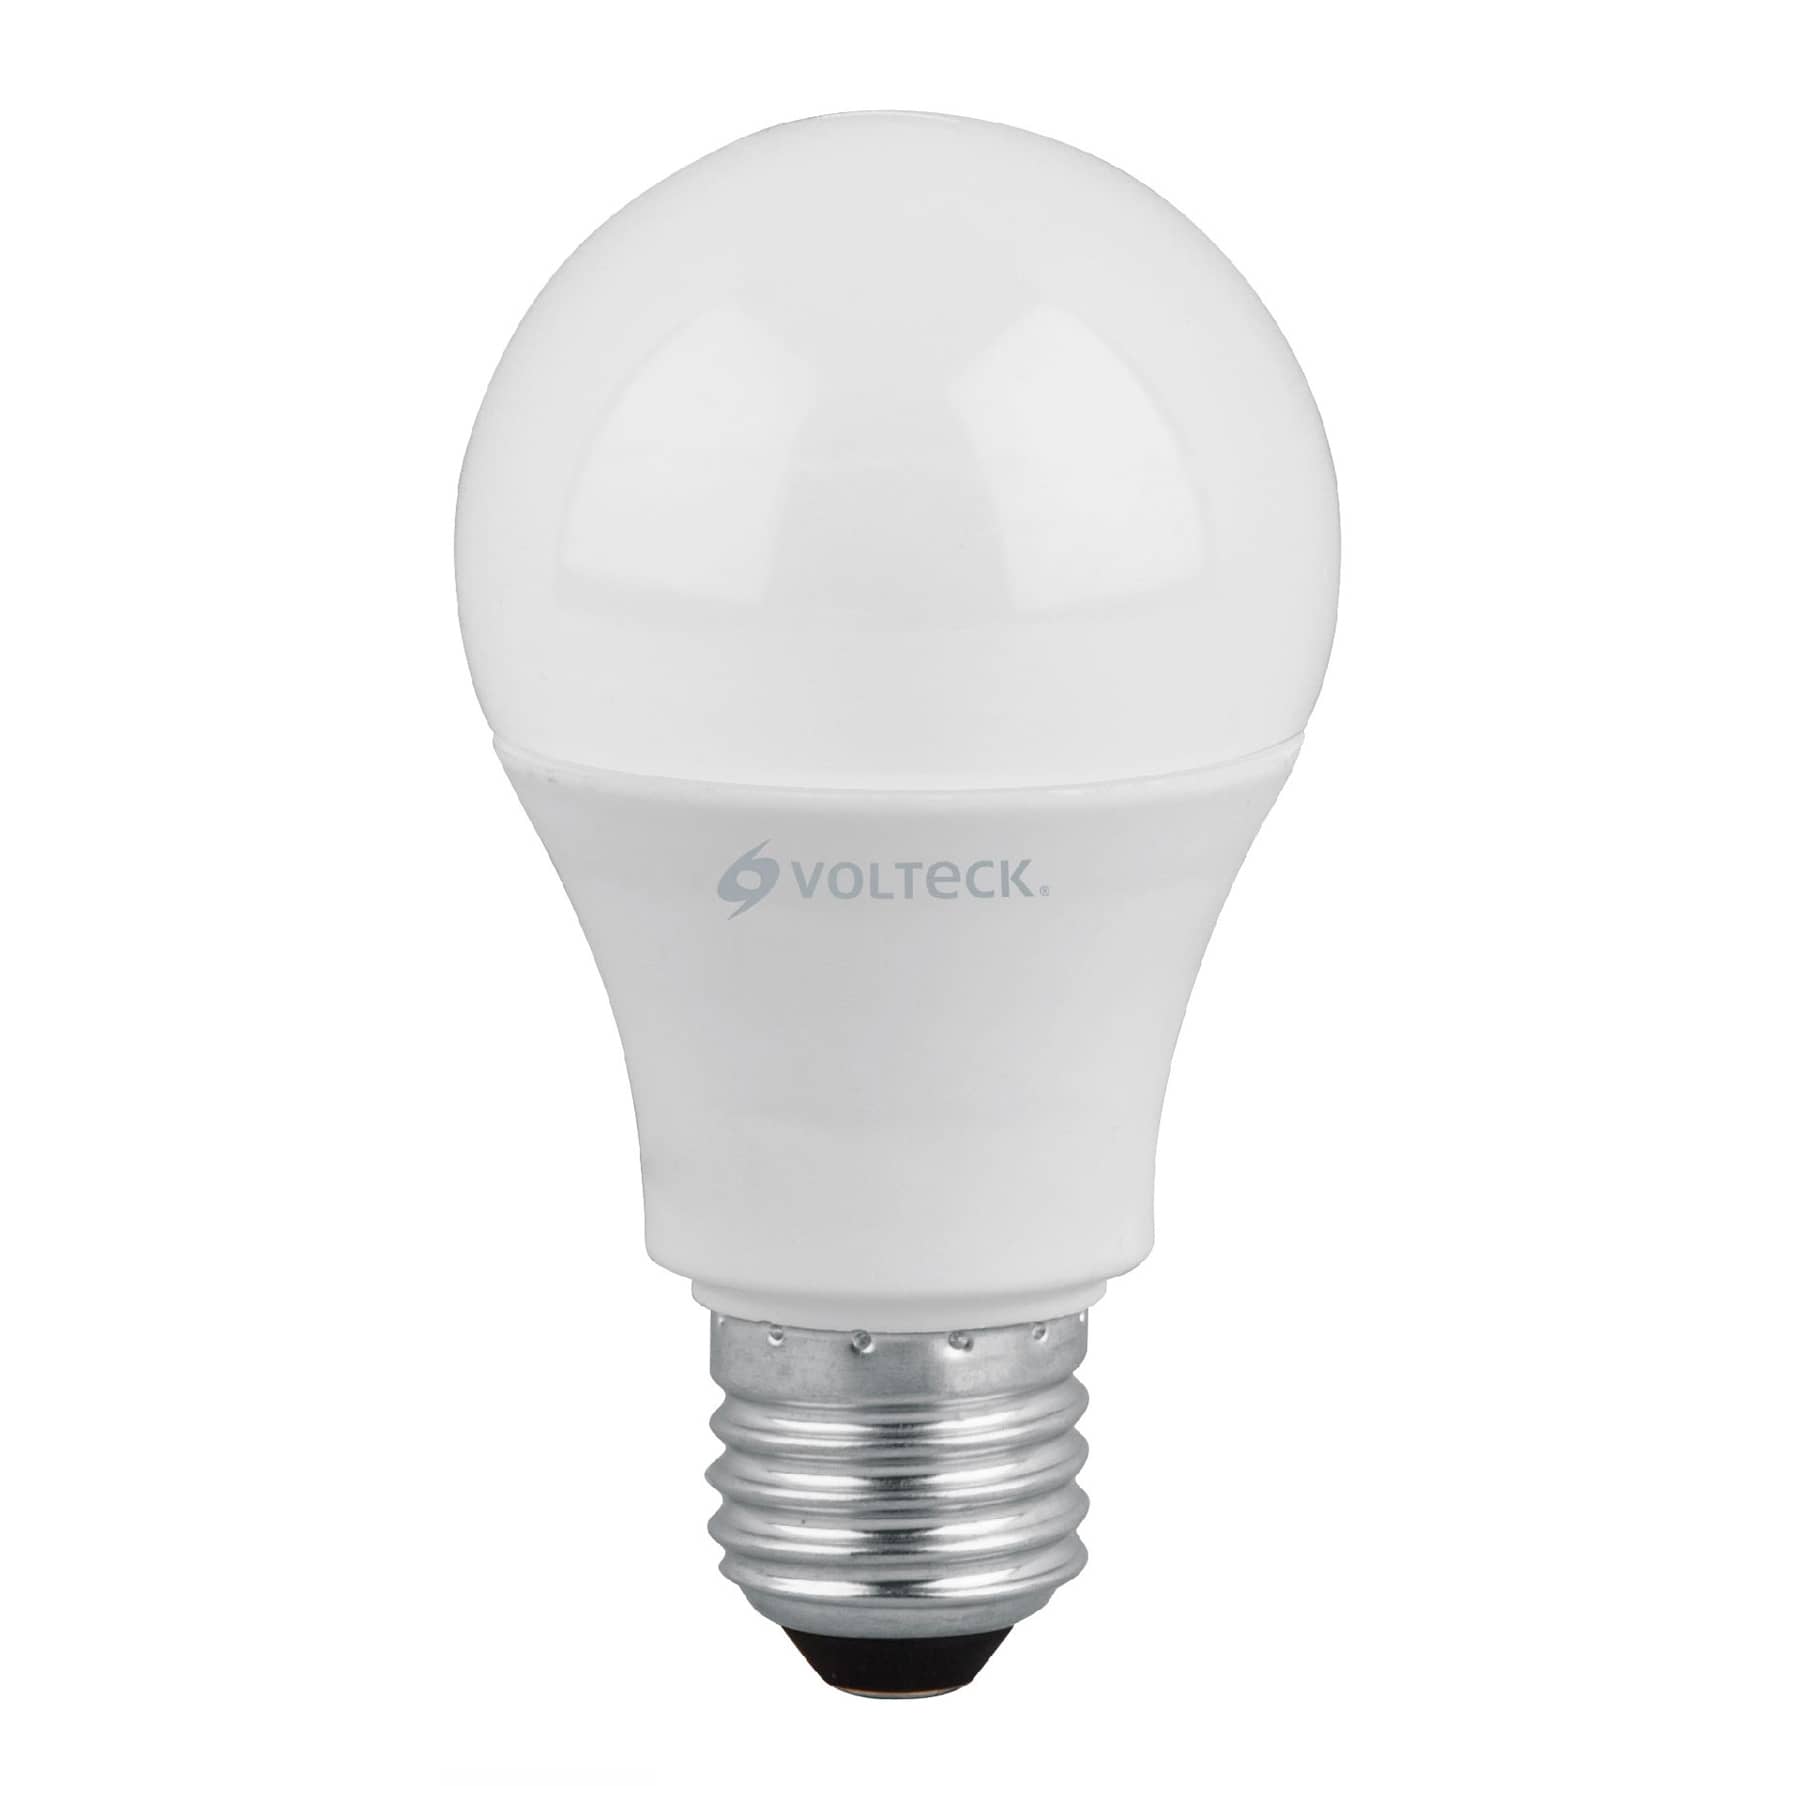  Volteck LED Bulb Lamps